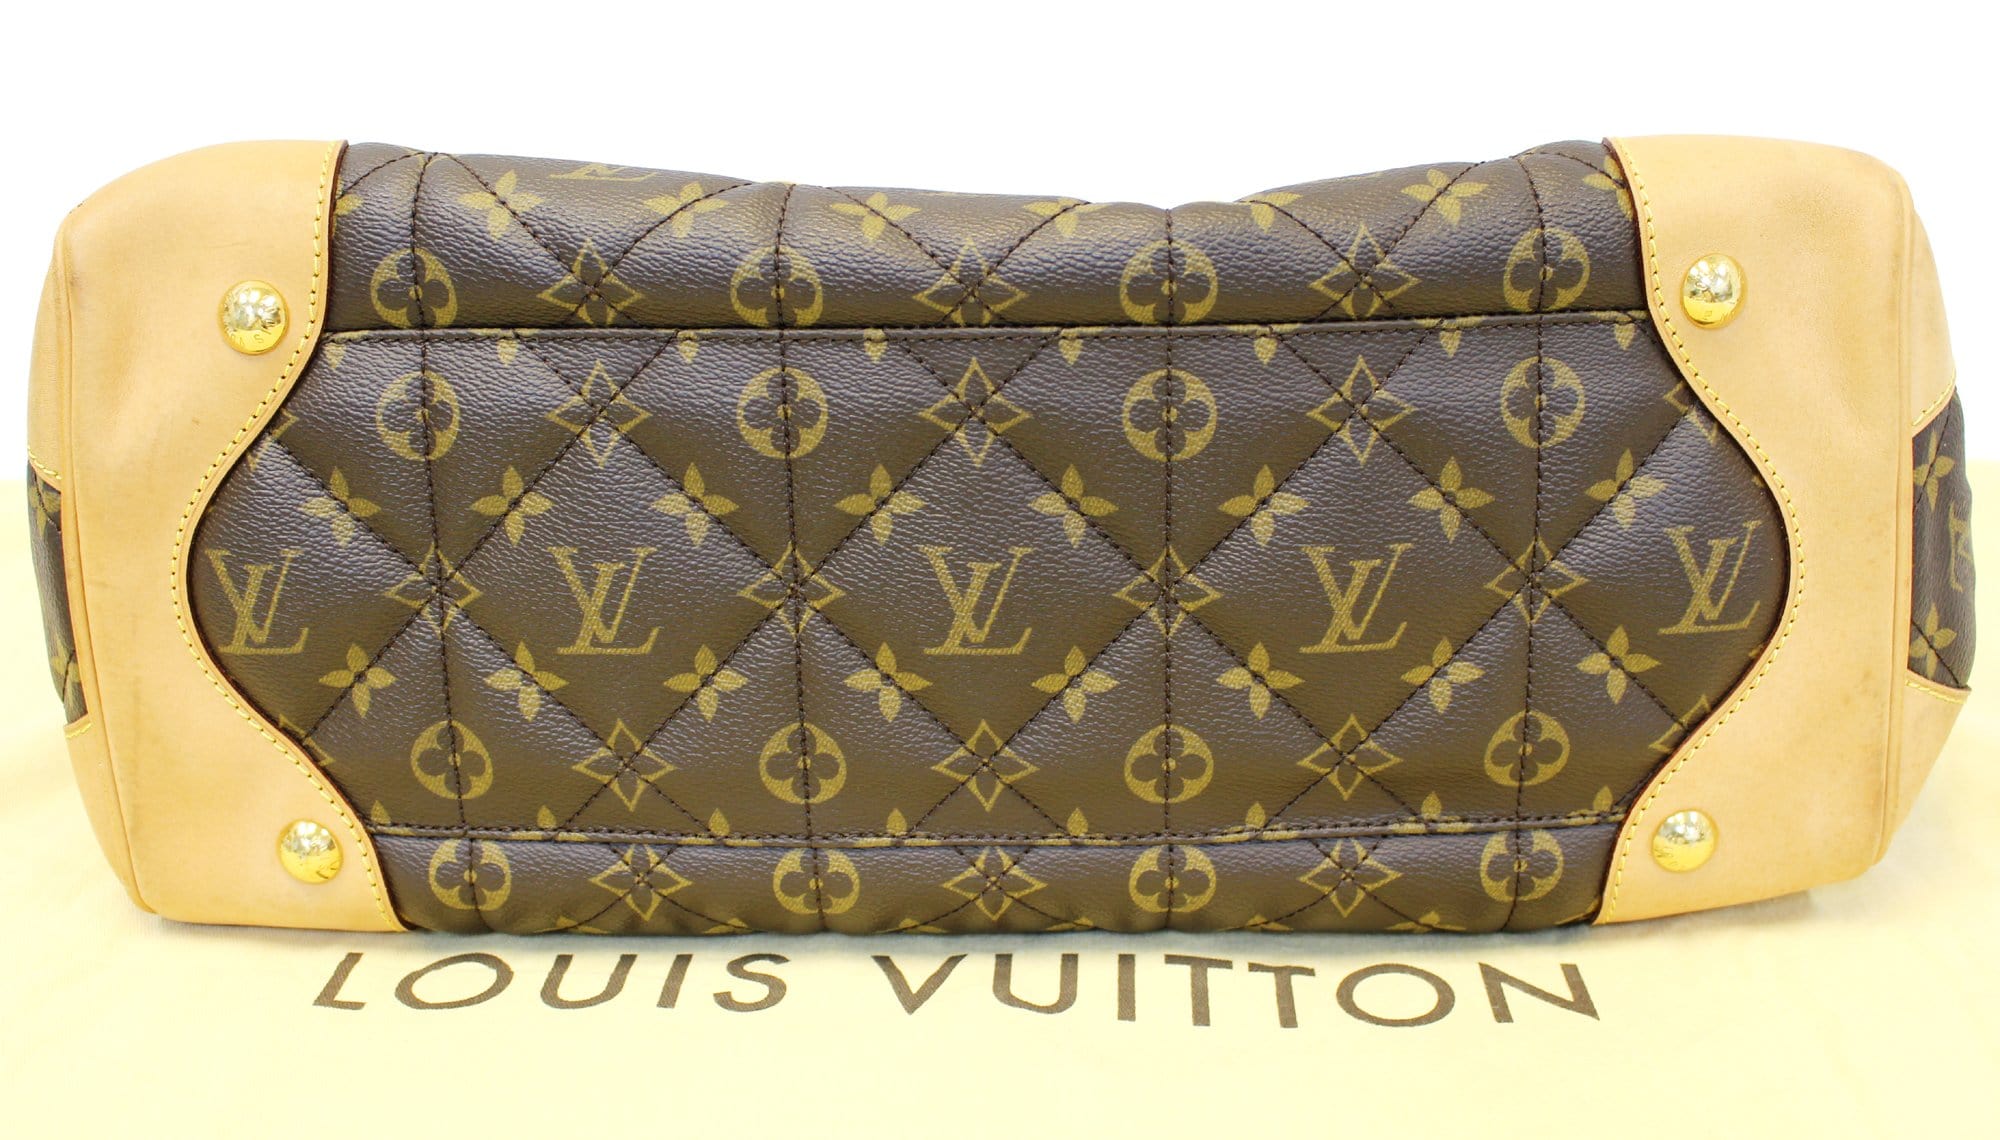 Louis Vuitton Monogram With Big Logo Center Grey Hoodie - Tagotee